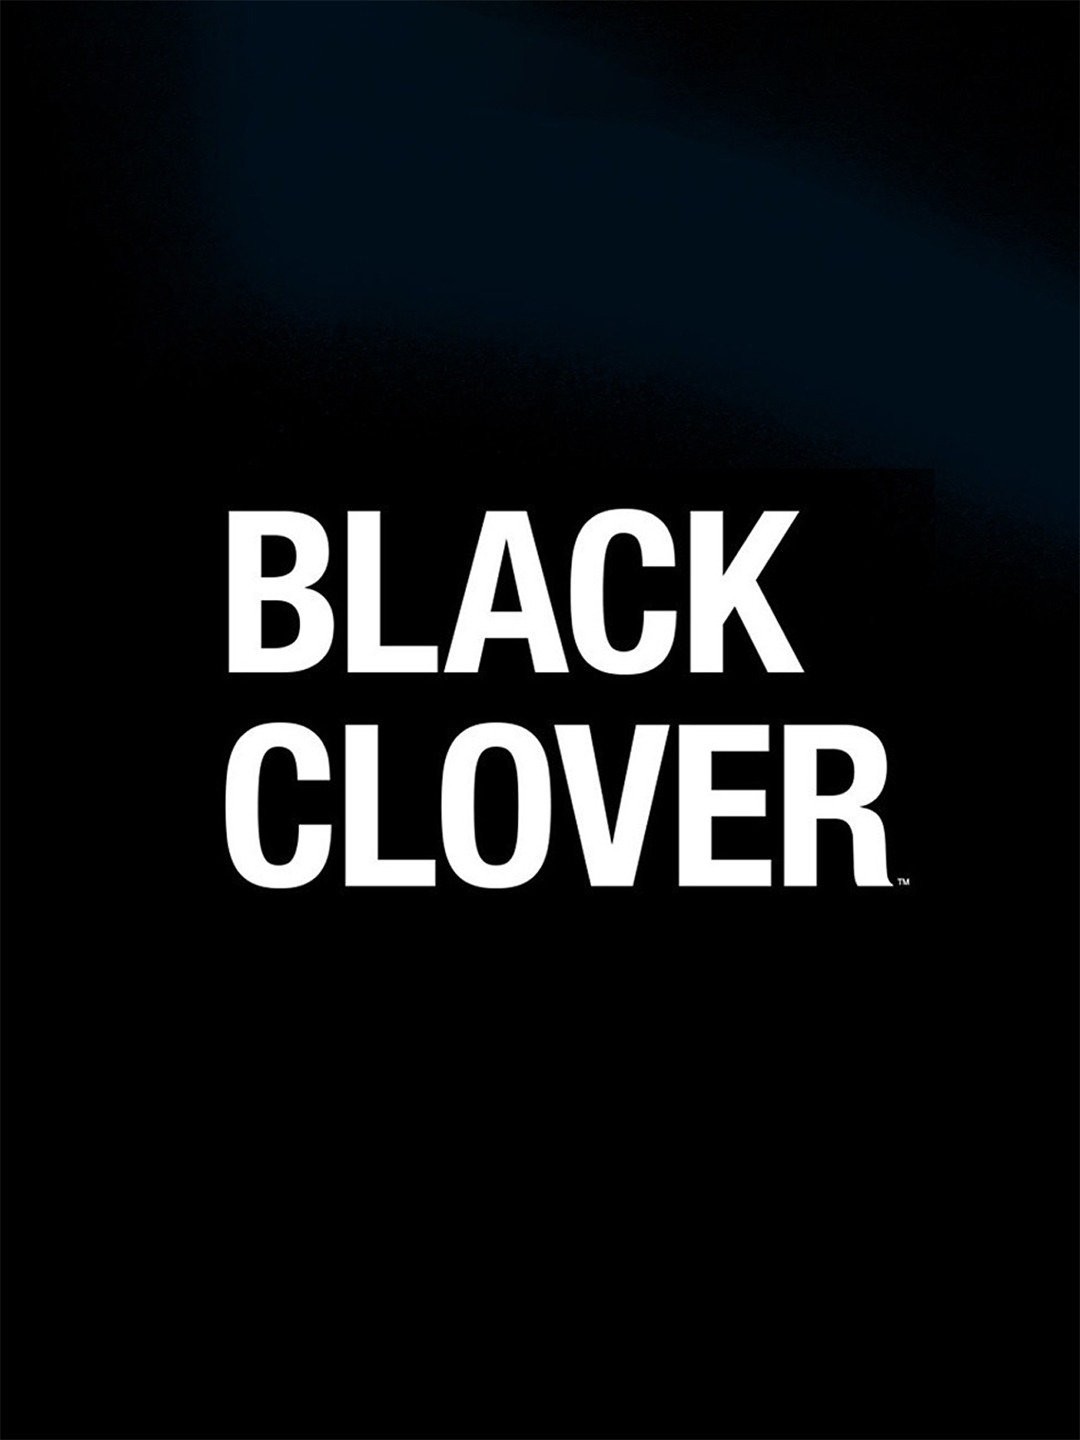 Let's Review: Black Clover